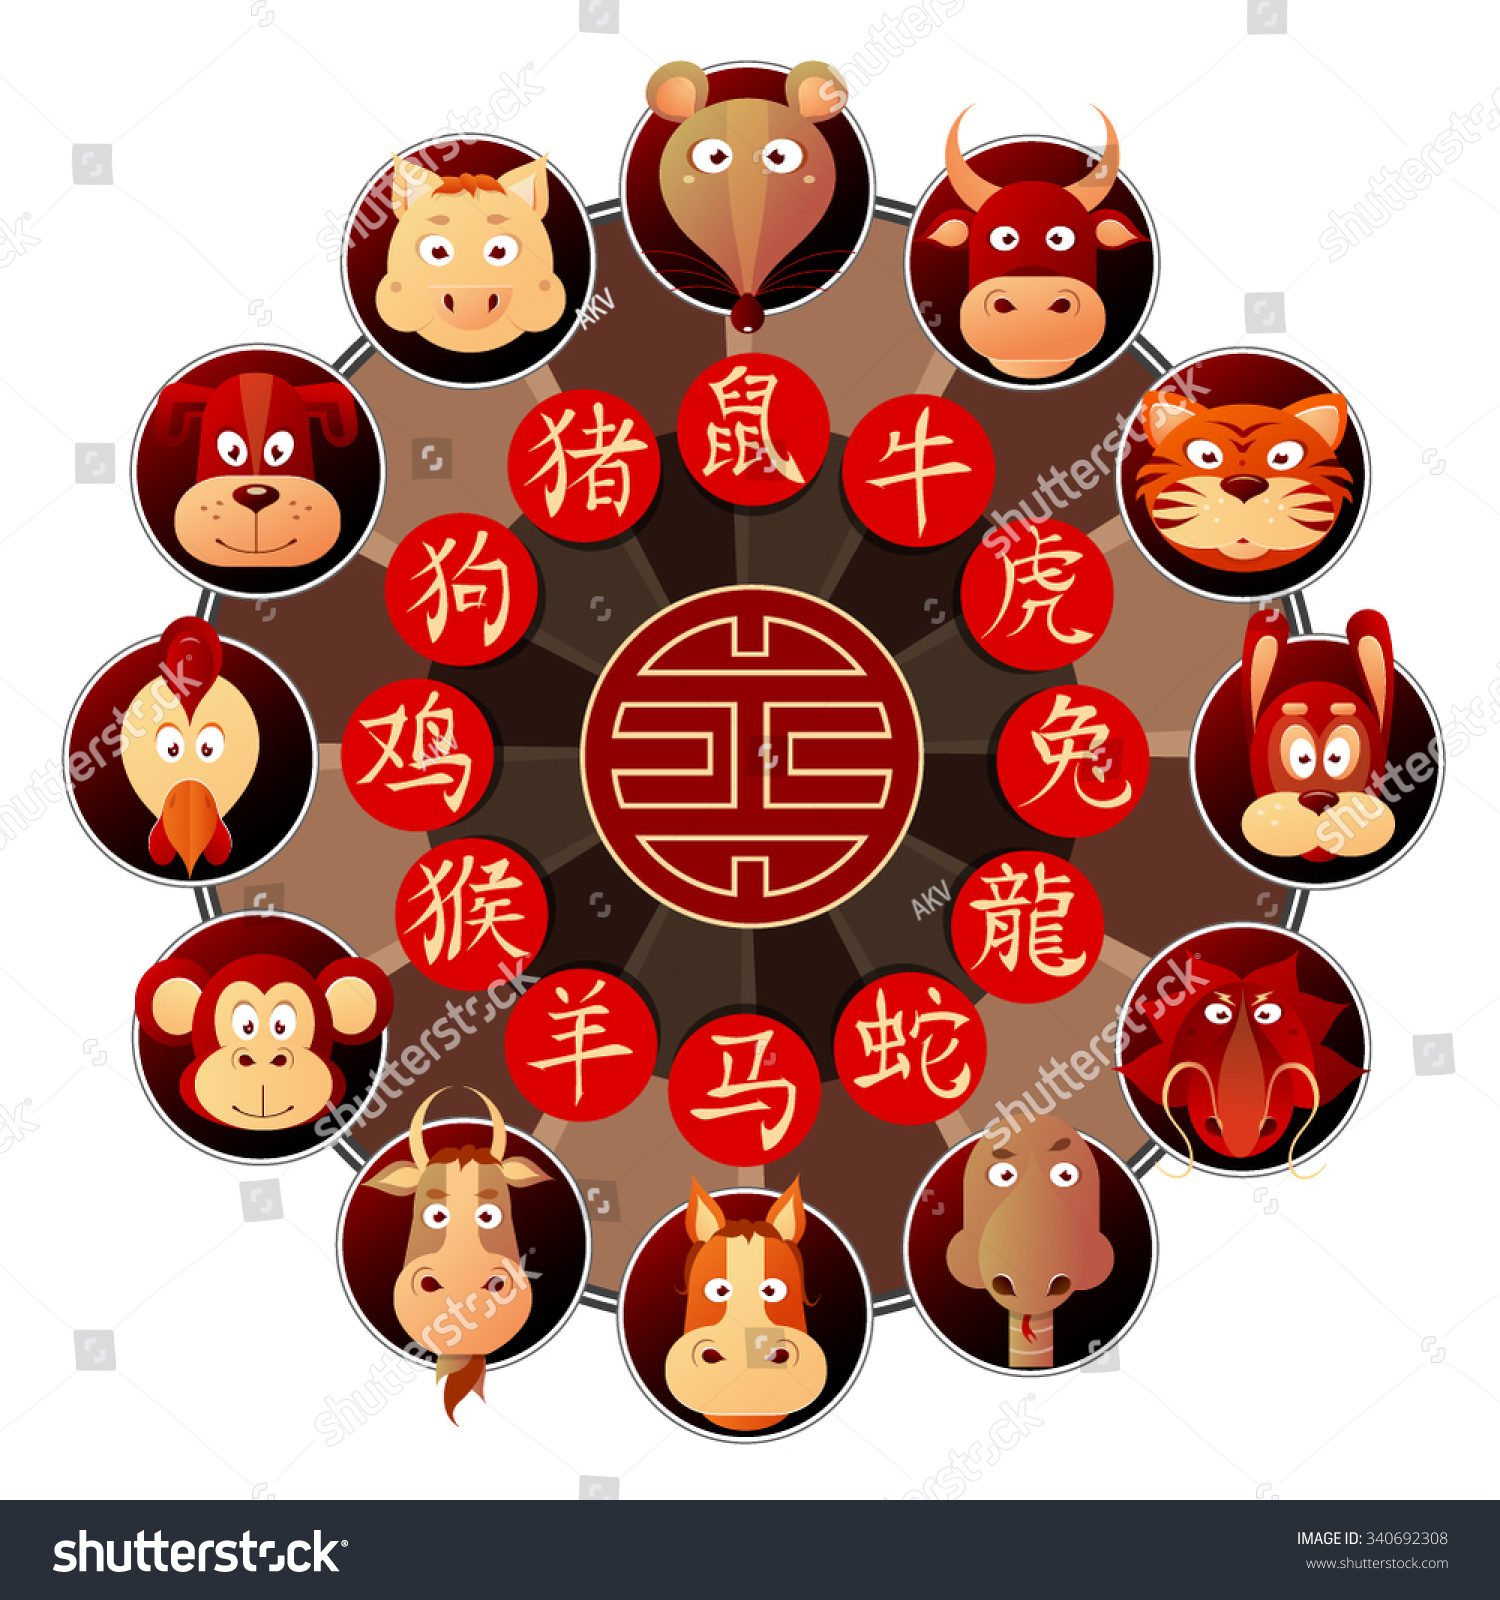 SVG of Chinese zodiac wheel with twelve cartoon animals with corresponding hieroglyphs svg